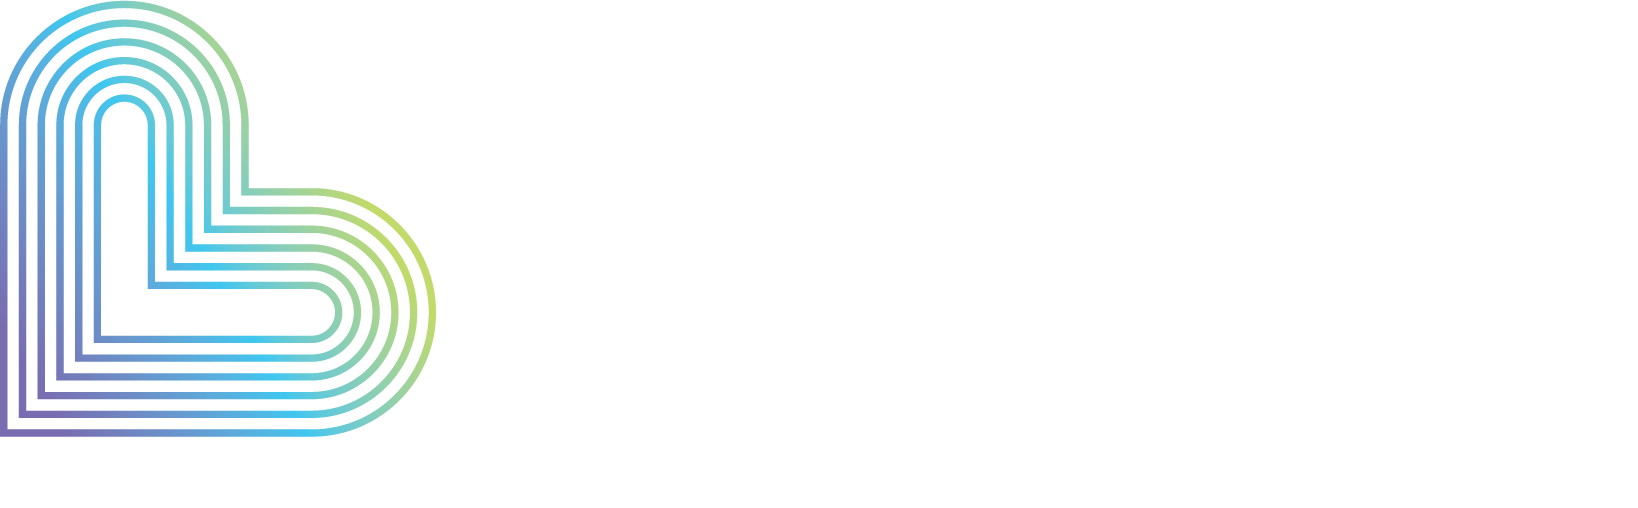 https://www.stlawrencegas.com/wp-content/uploads/2020/11/Liberty_Logo_Horizontal_rev.png